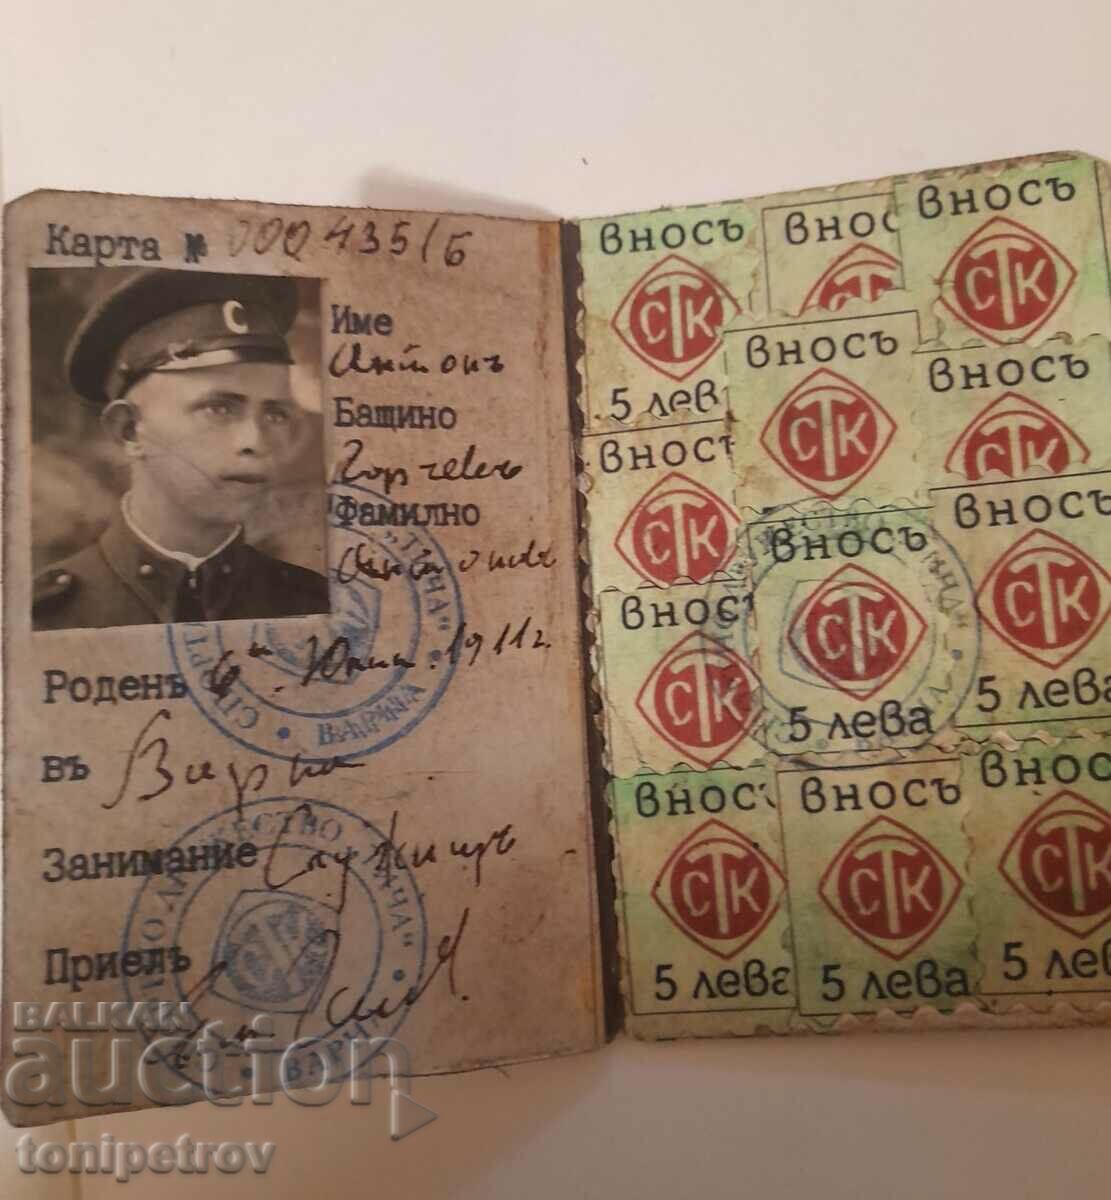 Membership card of S.K. Ticha Varna with 12 stamps